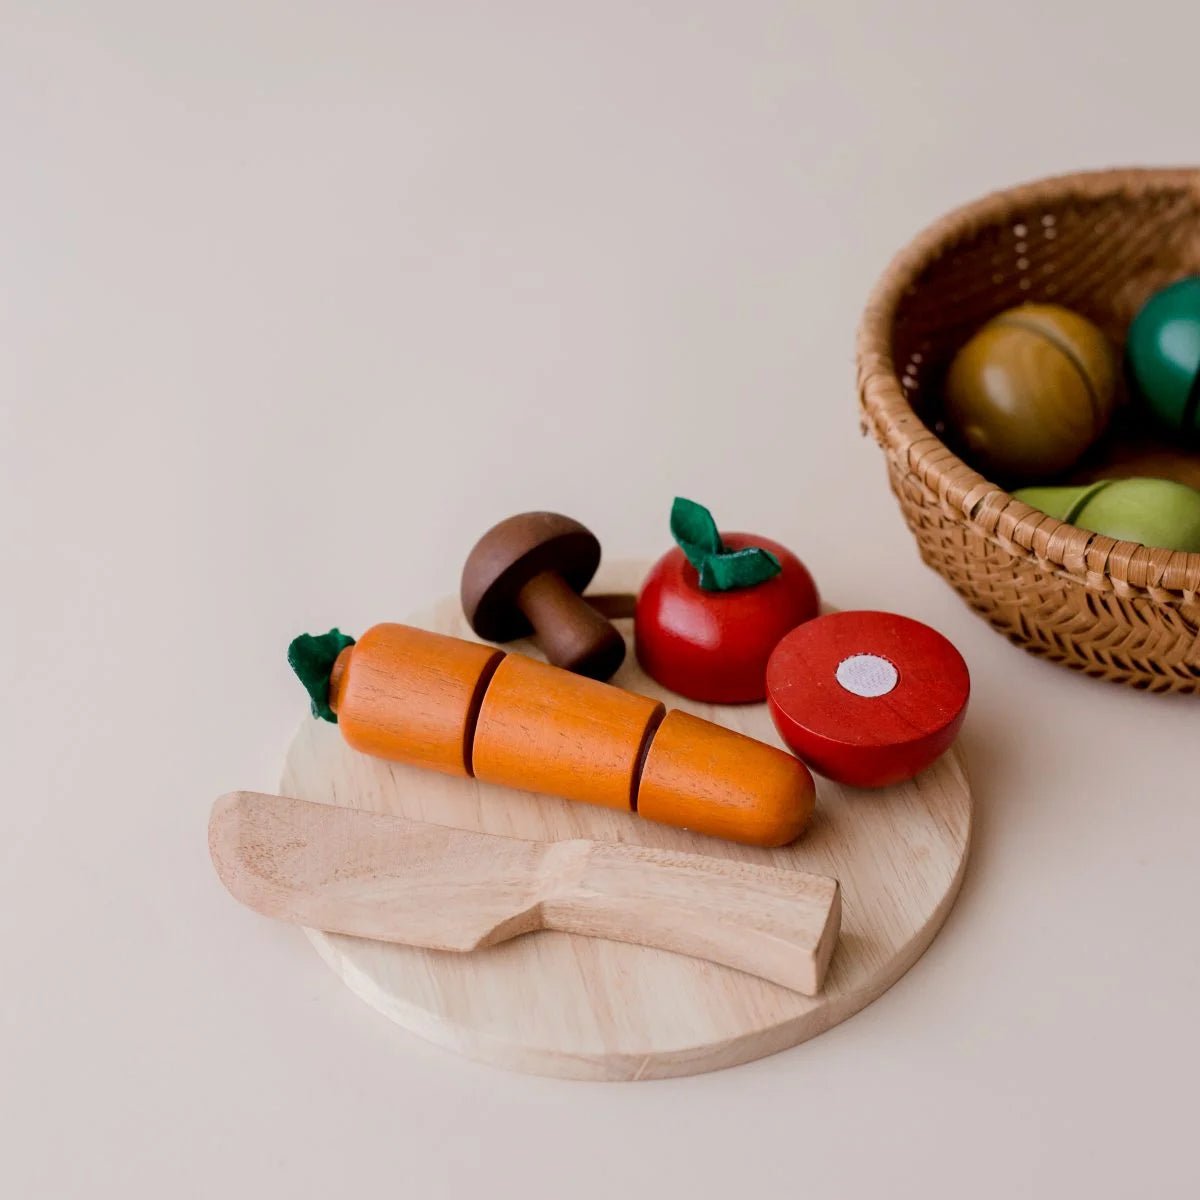 Wooden Cutting Fruit and Veggie Basket Set